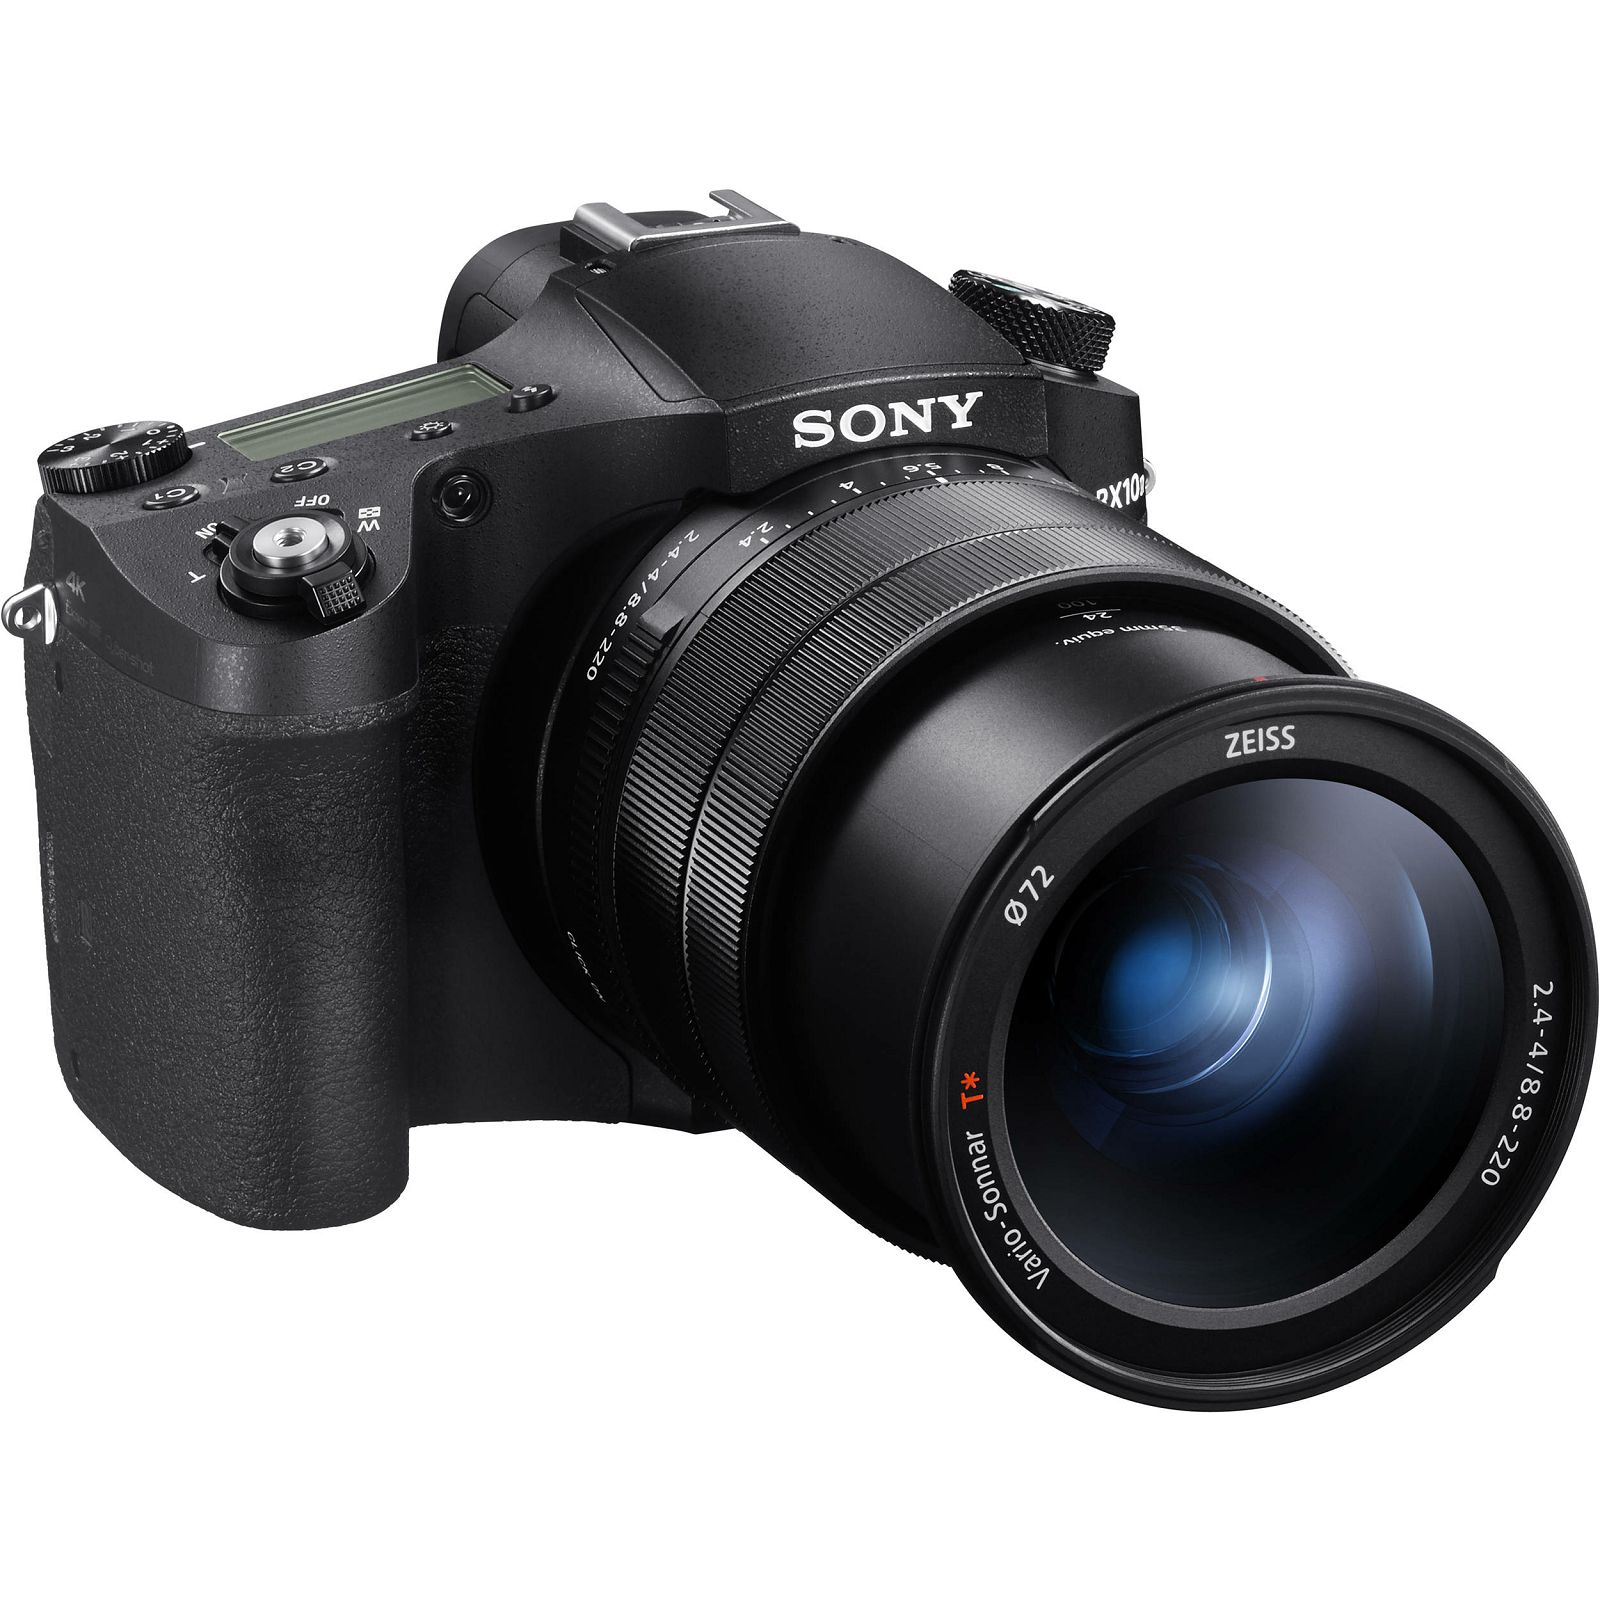 Sony Cyber-shot DSC-RX10 IV kompaktni digitalni fotoaparat s integriranim objektivom Carl Zeiss Vario-Sonnar T* 8.8-220mm f/2.4-4.8 Digital Camera